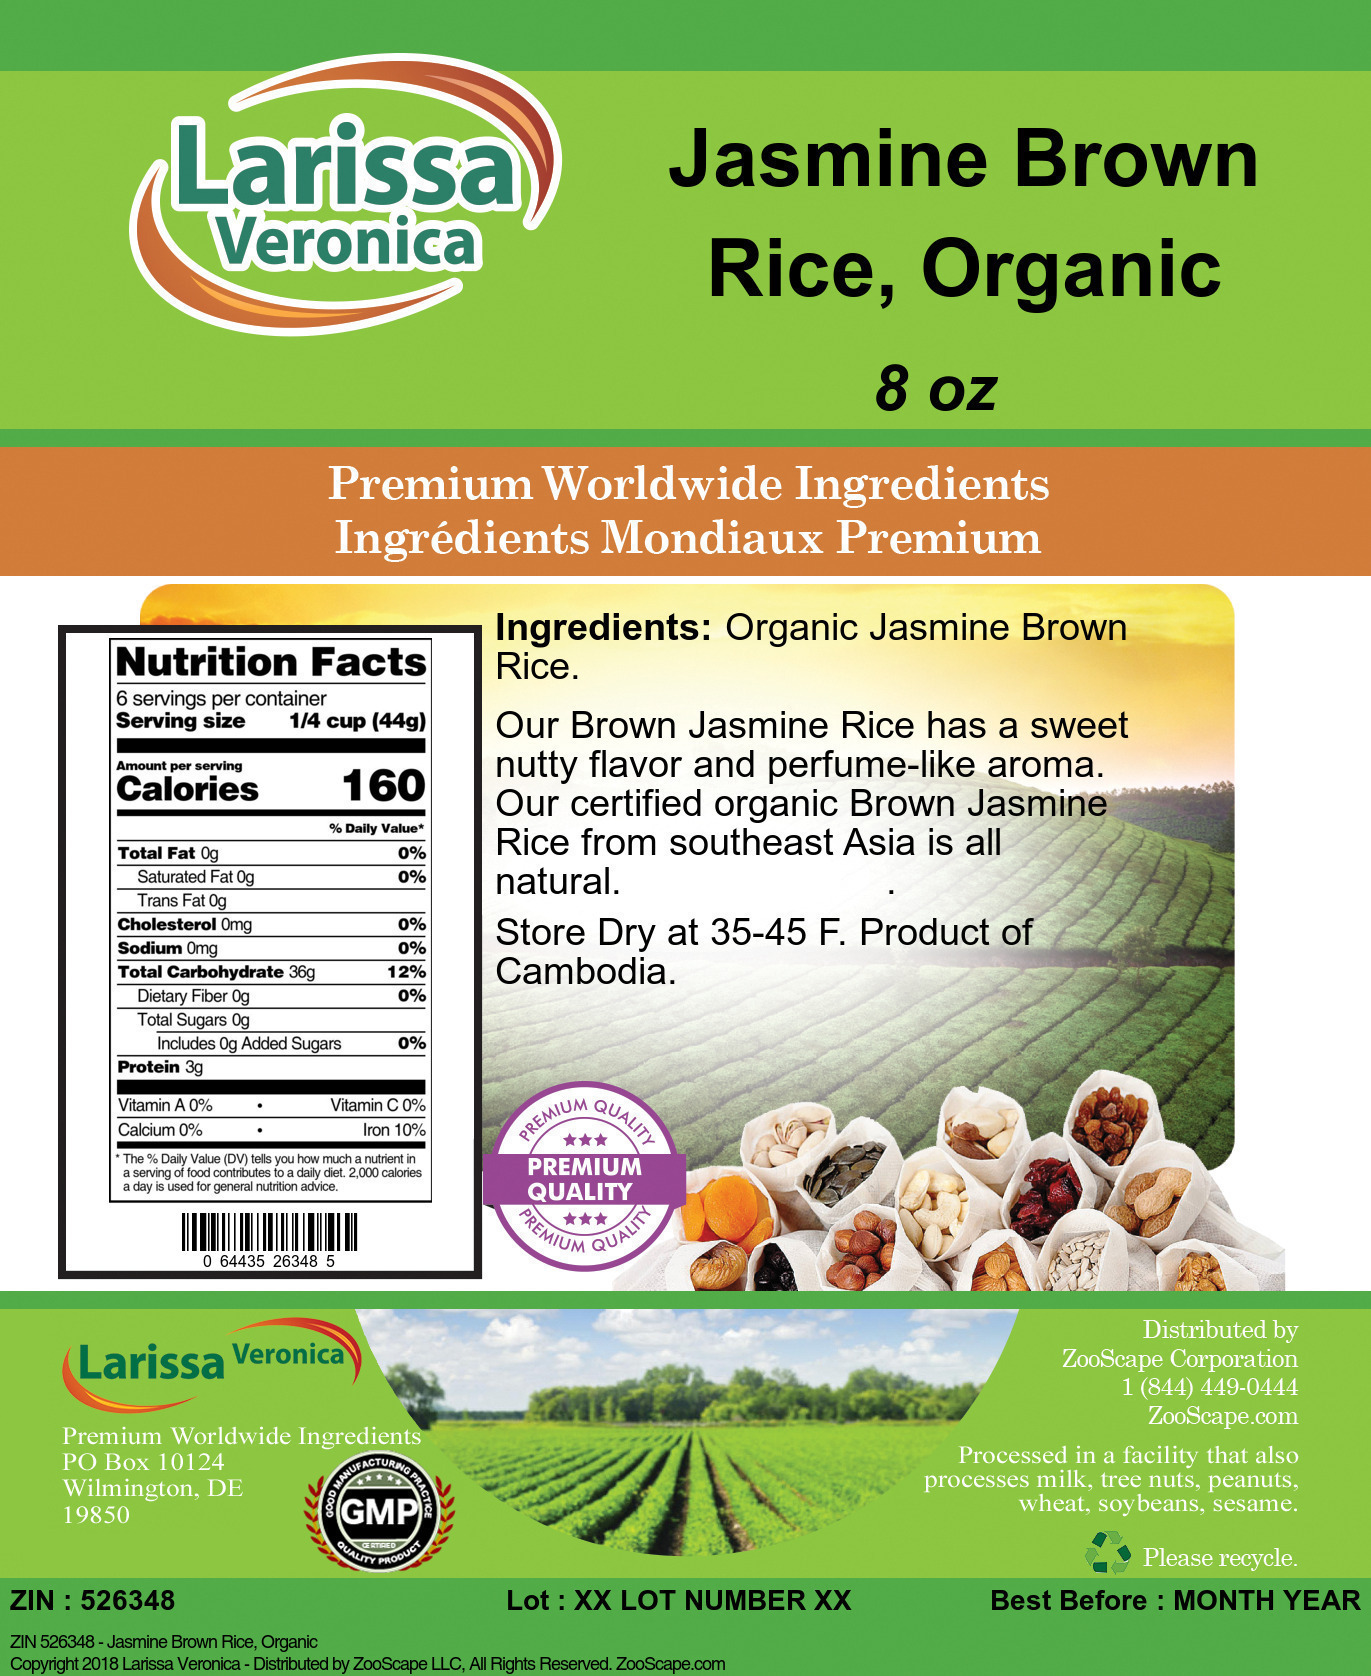 Jasmine Brown Rice, Organic - Label